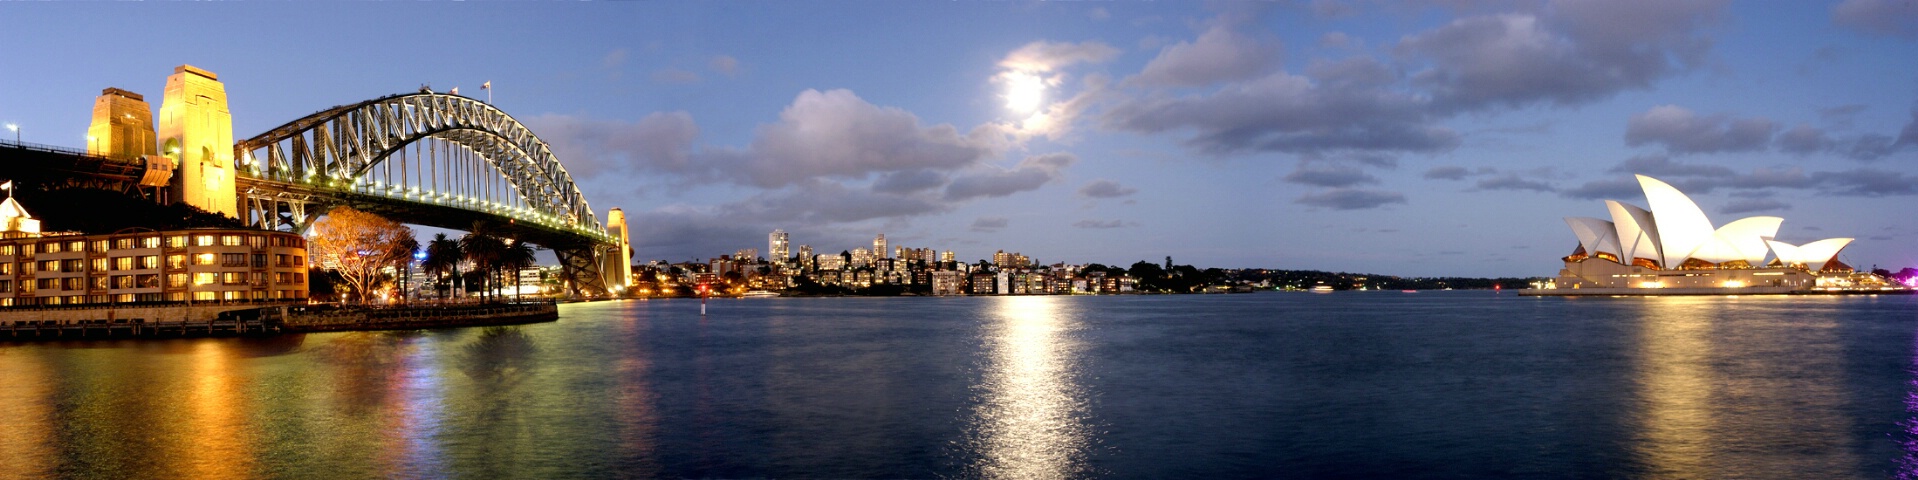 Sydney Must-see 